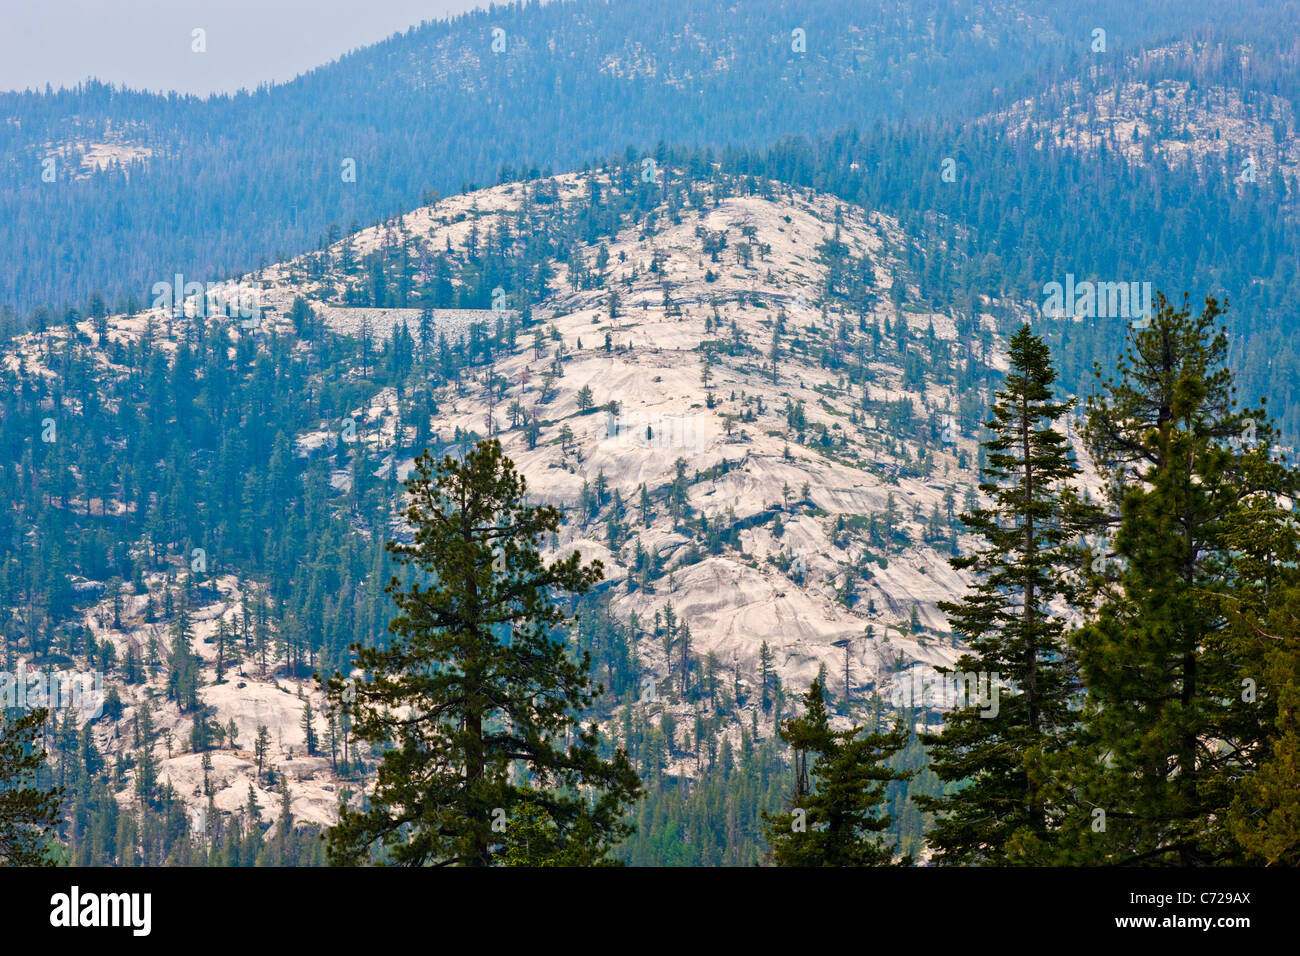 View across Yosemite Valley from Tioga Road, Yosemite National Park, USA. JMH5281 Stock Photo